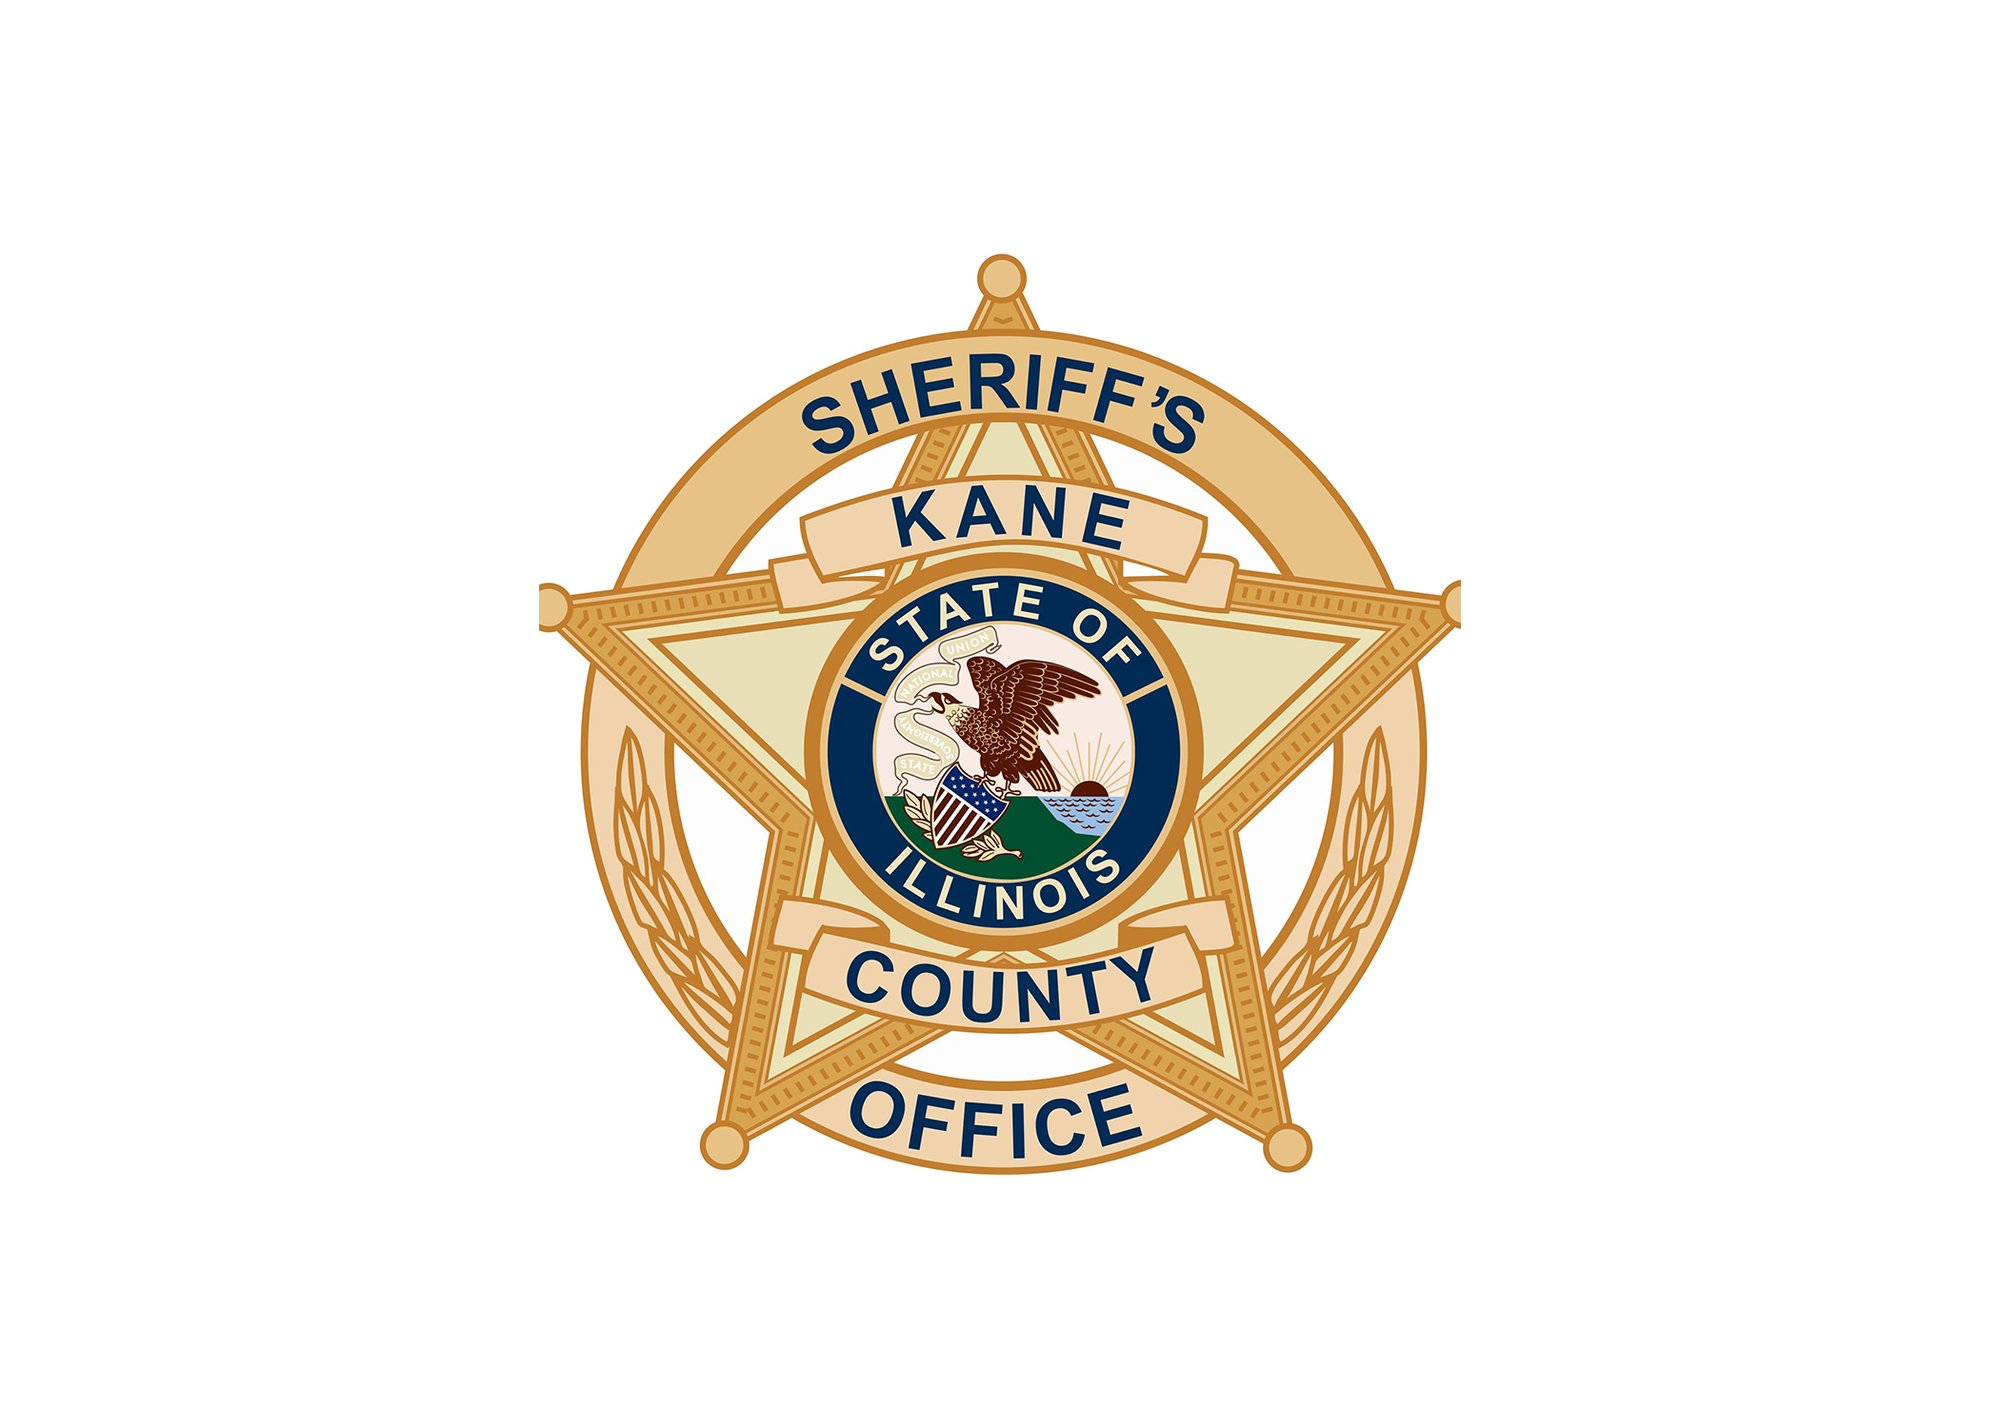 Kane county sheriffs office logo